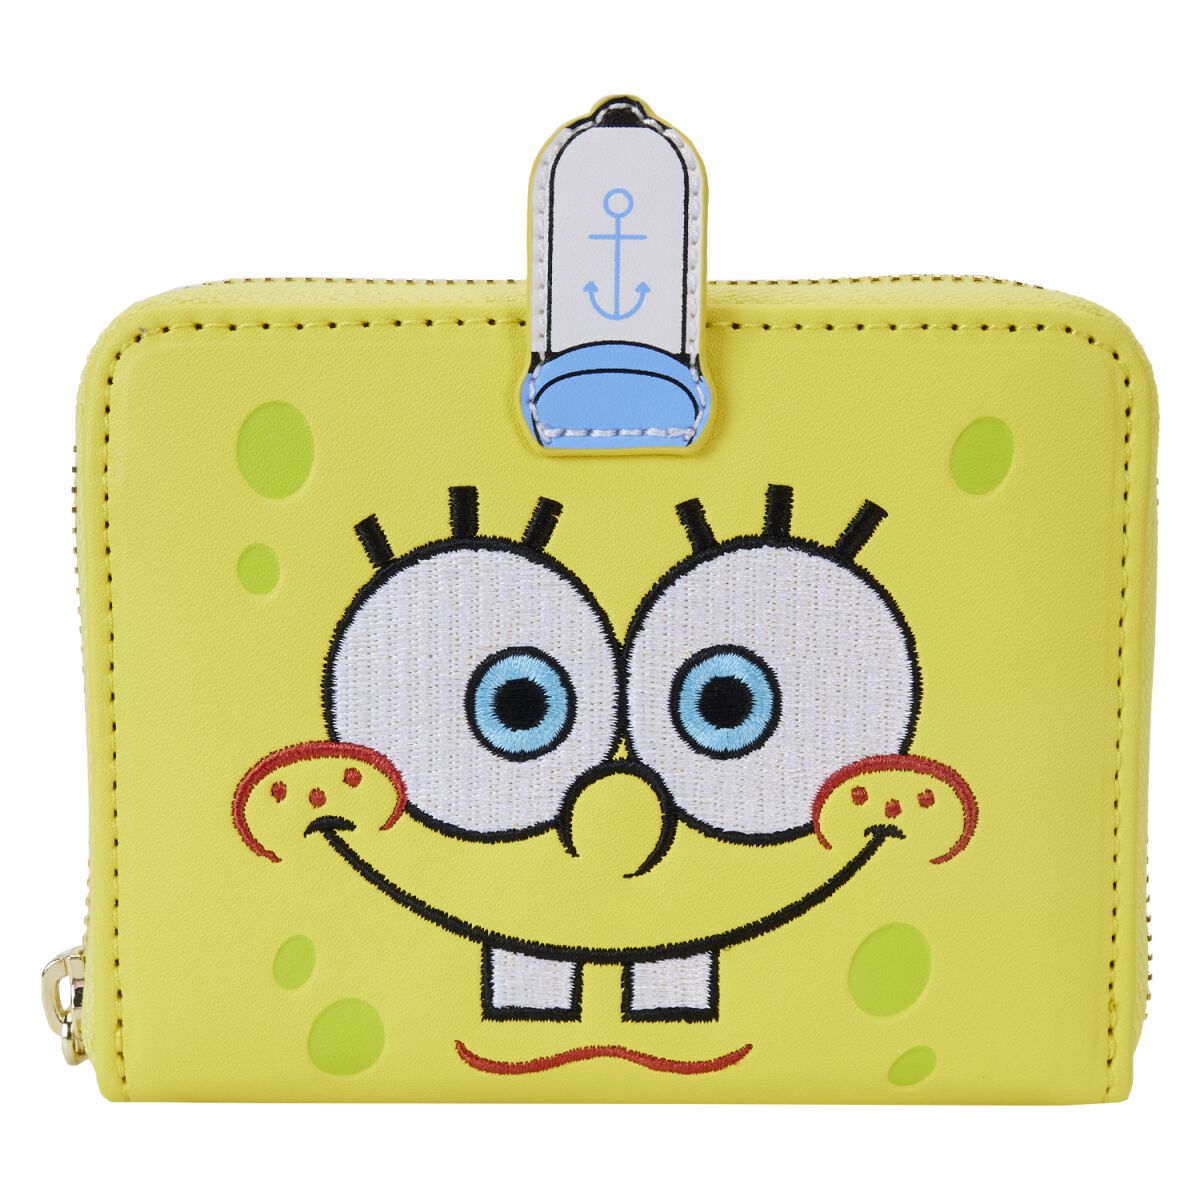 Image of Portafoglio di SpongeBob SquarePants - Loungefly - Spongebob - Donna - multicolore